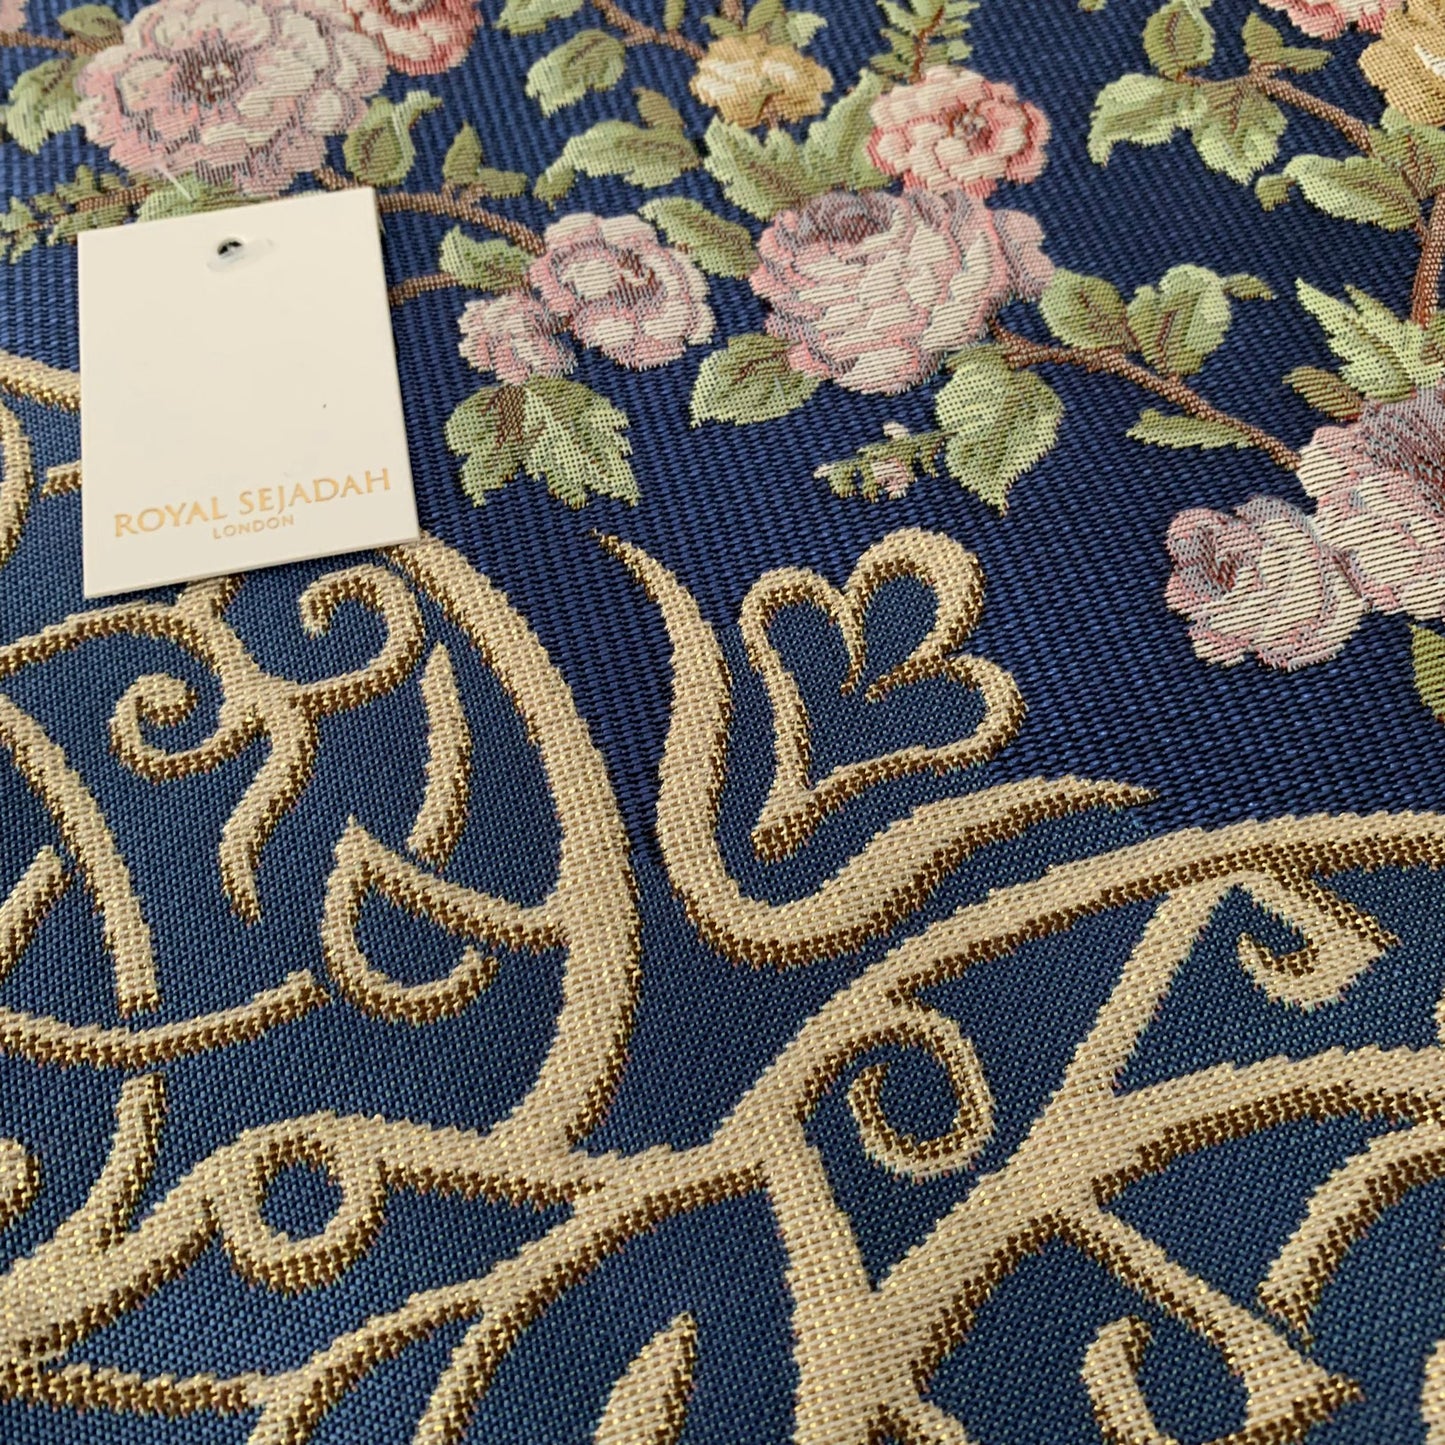 Royal Sejadah - Luxury Prayer Mat & Tasbih - Royal Blue Floral Design